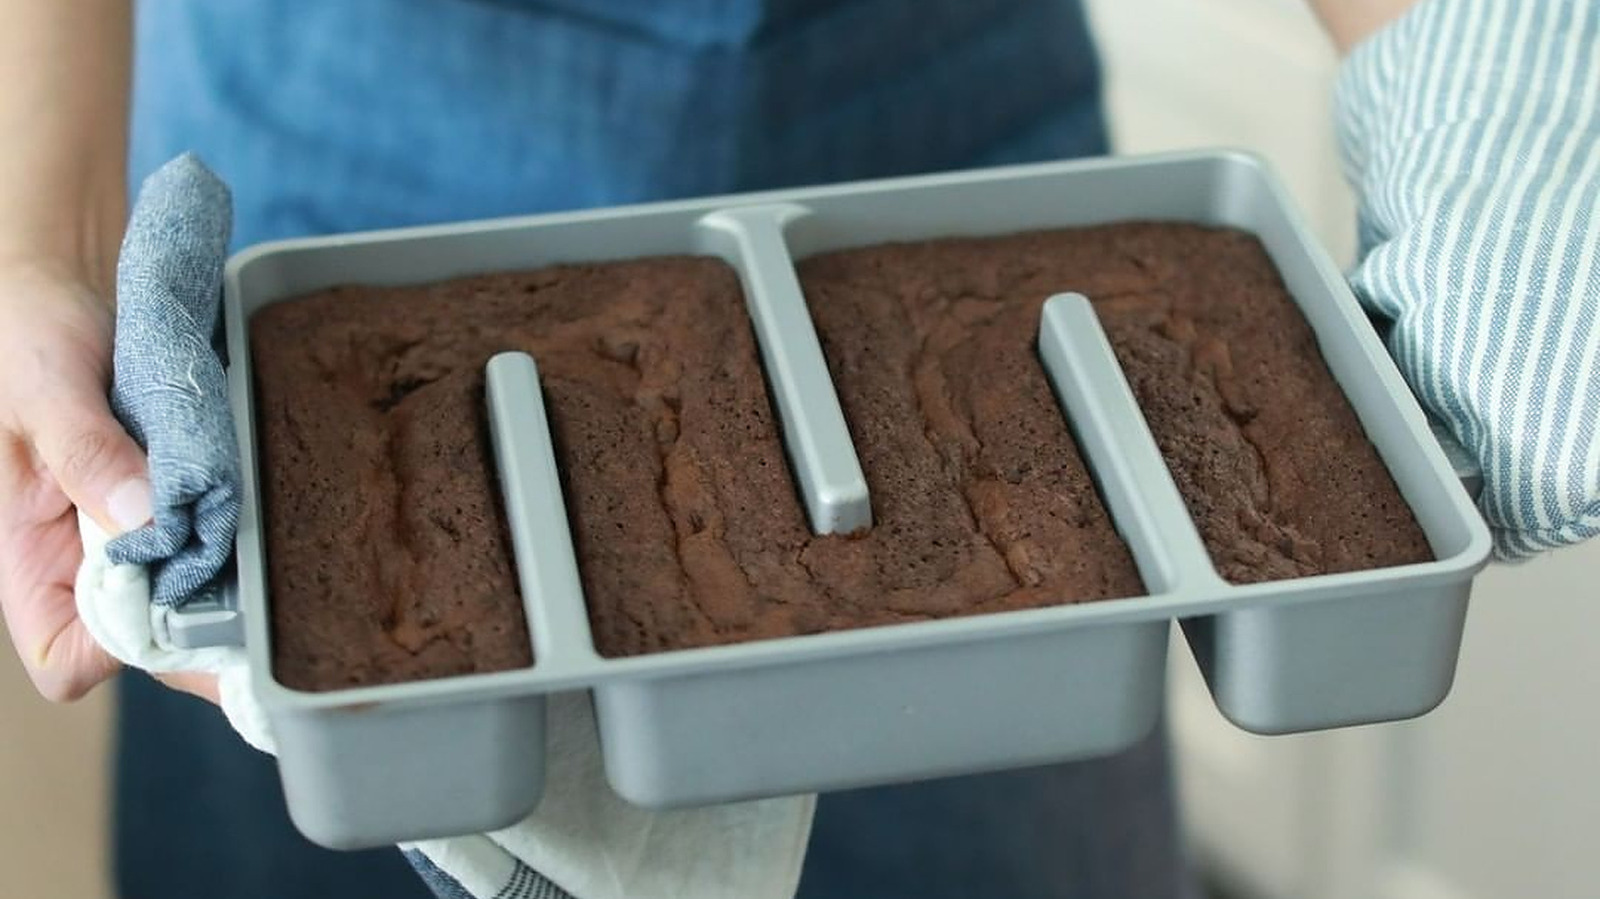 The Edge-Only Brownie Pan: A $1 Million Idea